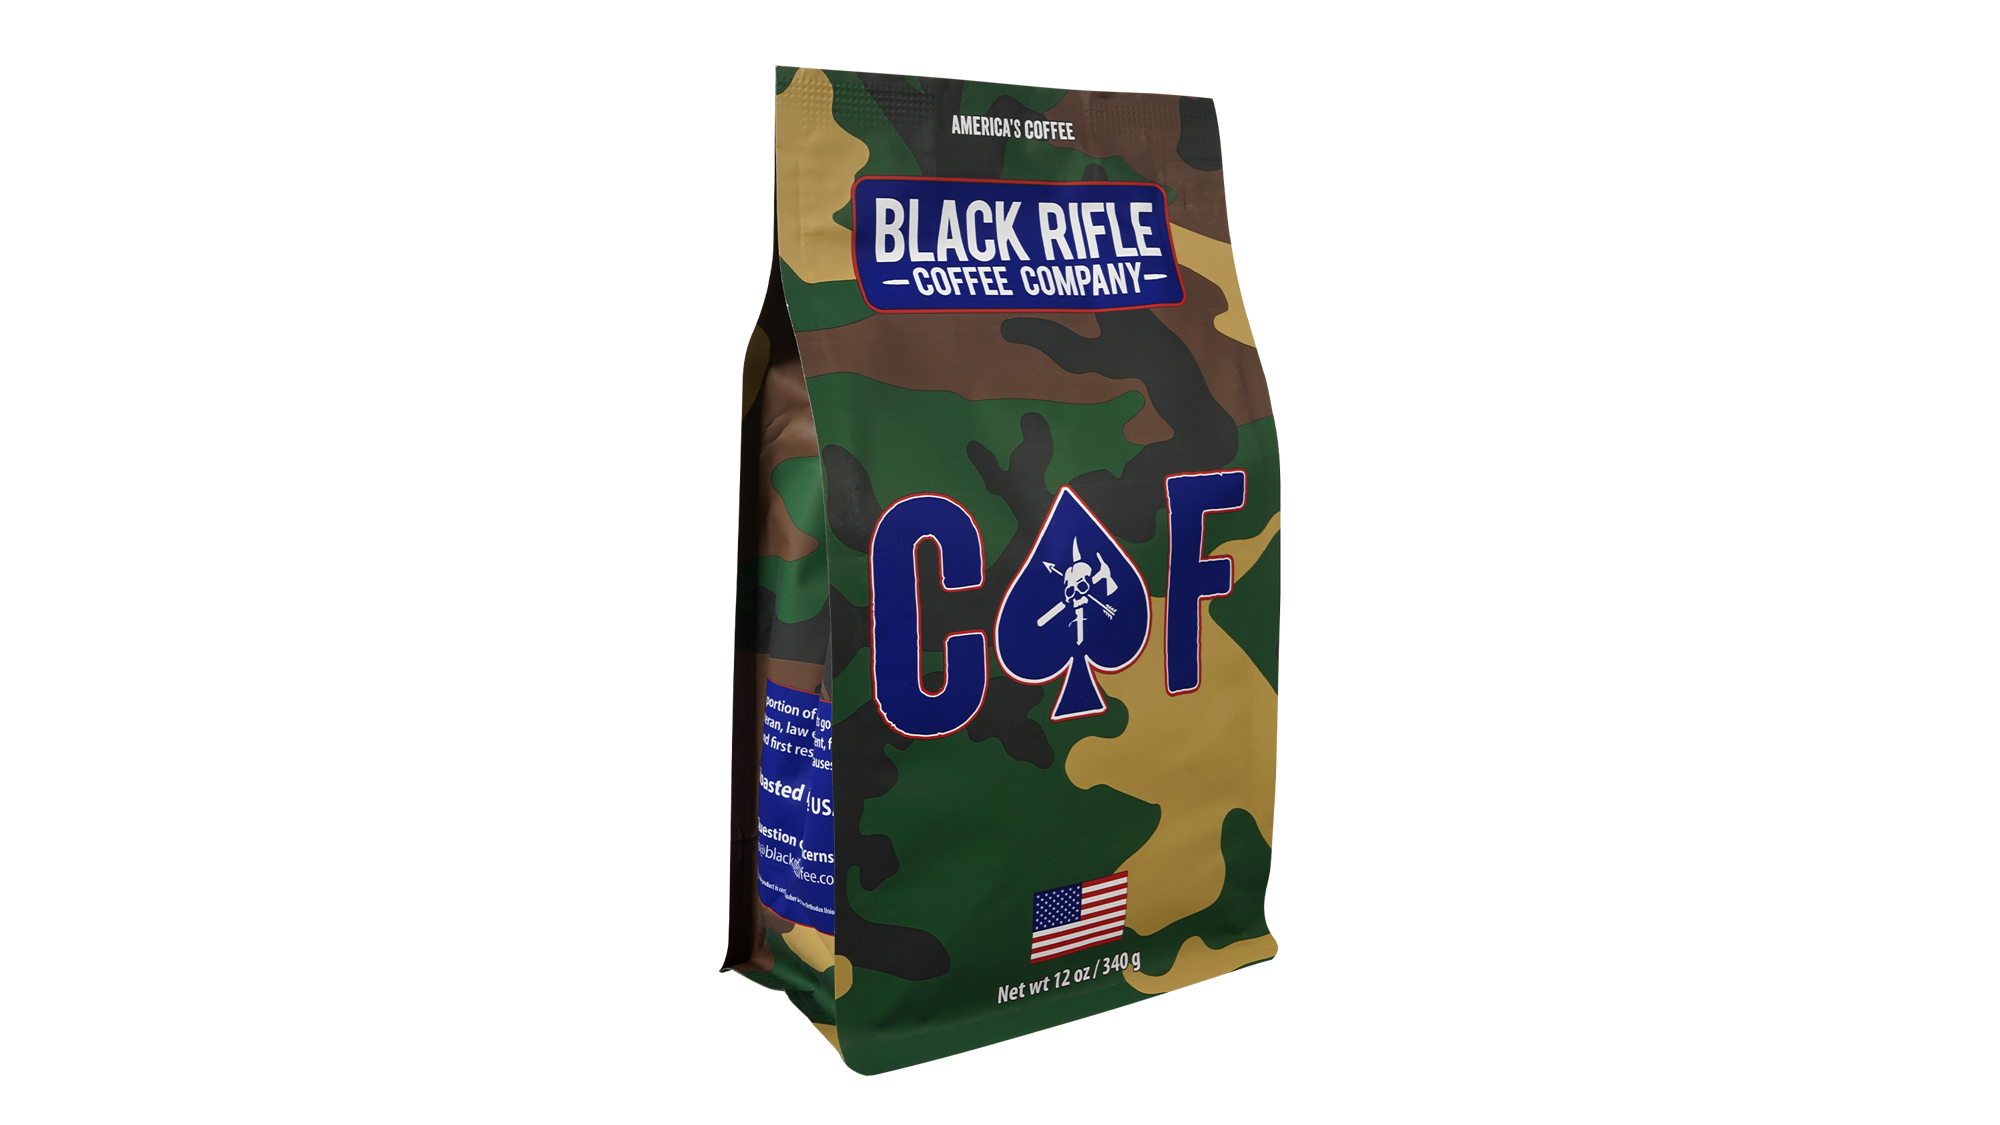 Black Rifle Coffee - C.A.F.